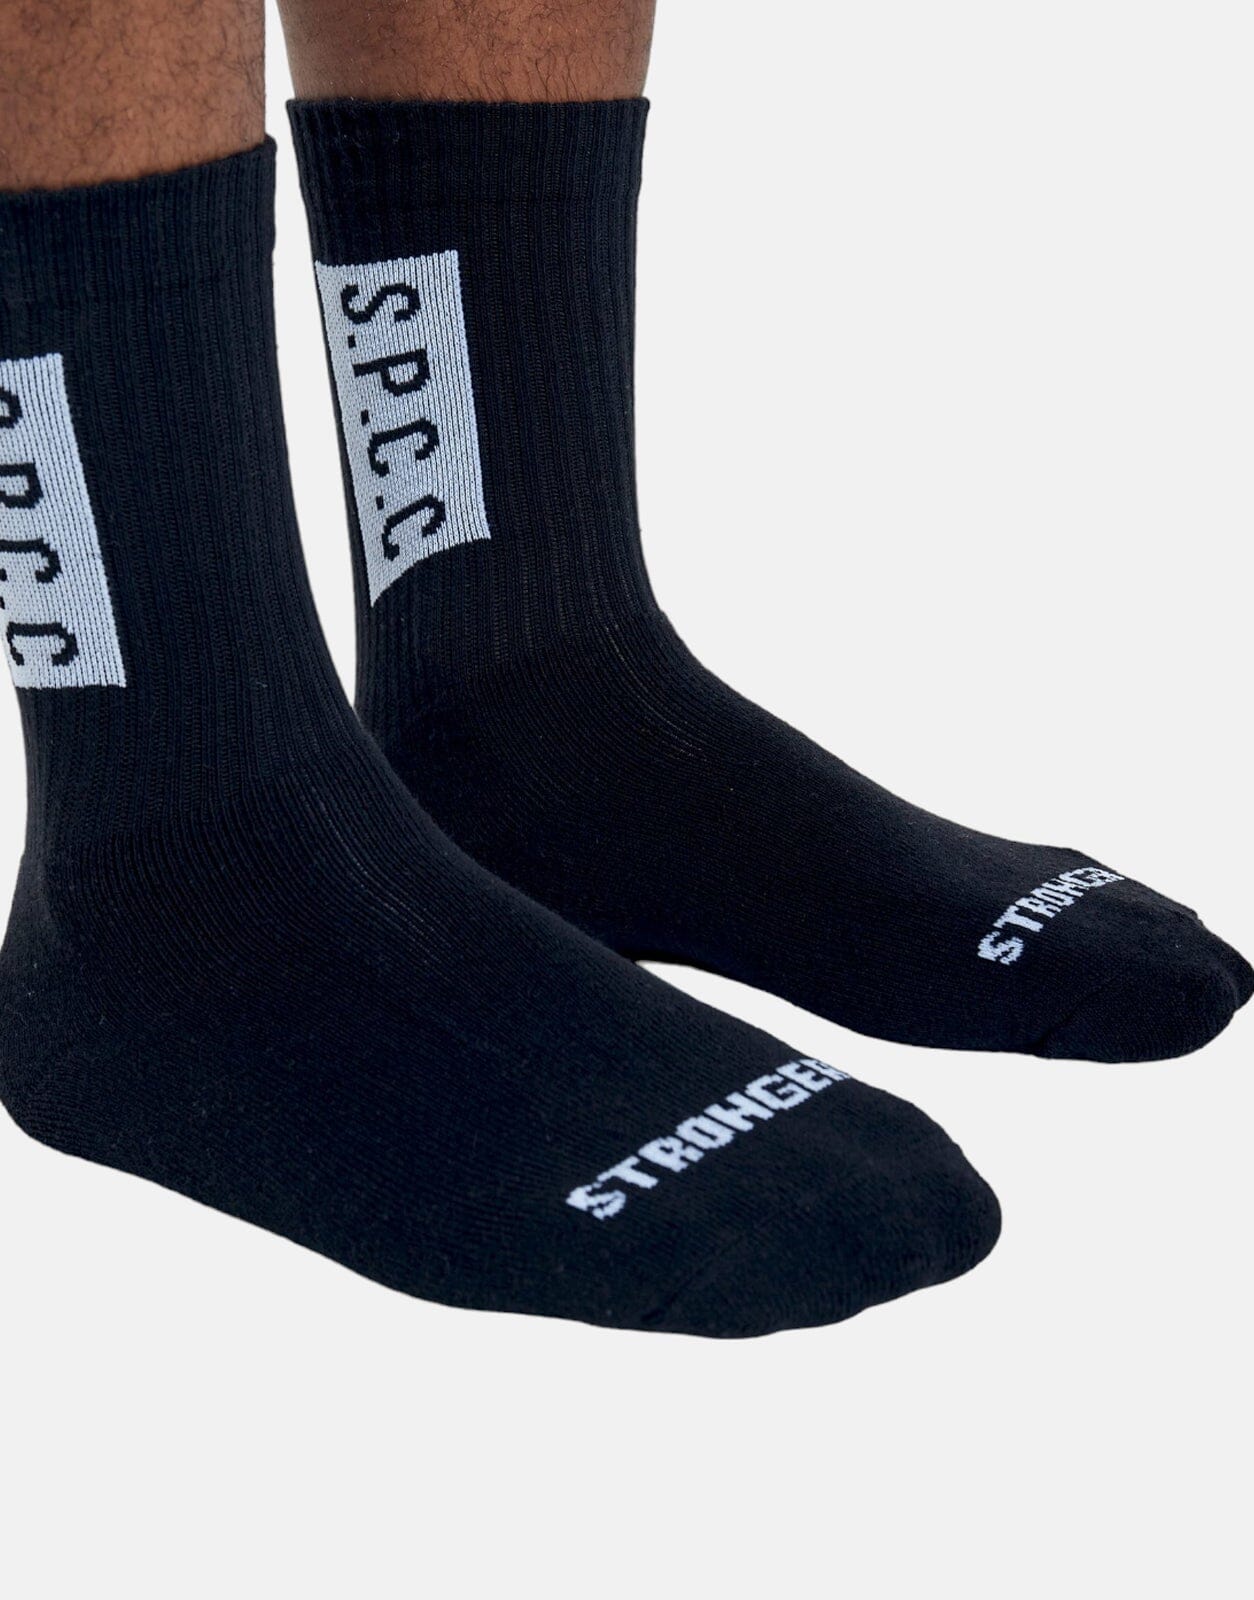 SPCC Johnson 3PK Blk/Wht Socks - Subwear